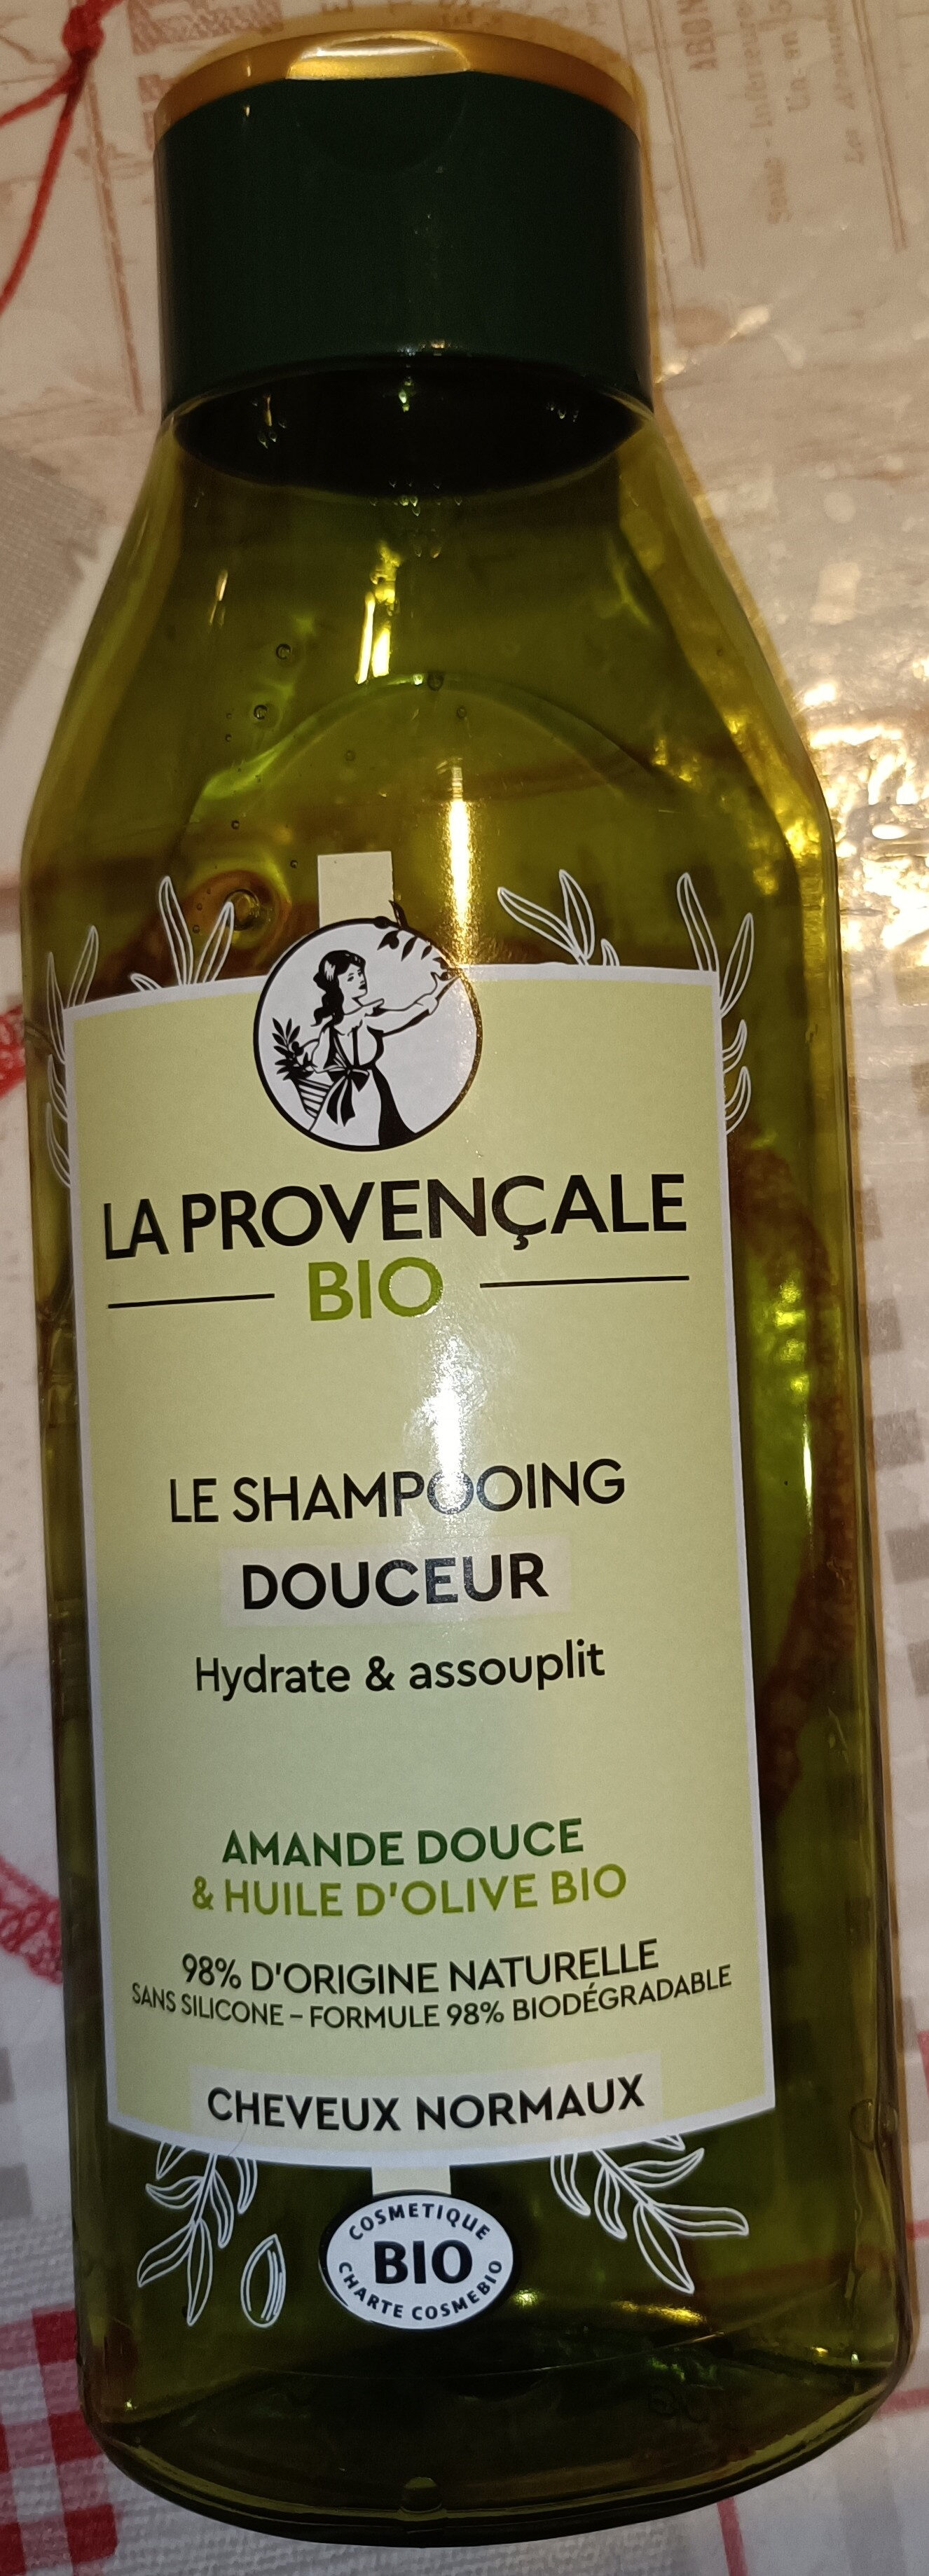 Le shampooing douceur - Produto - fr